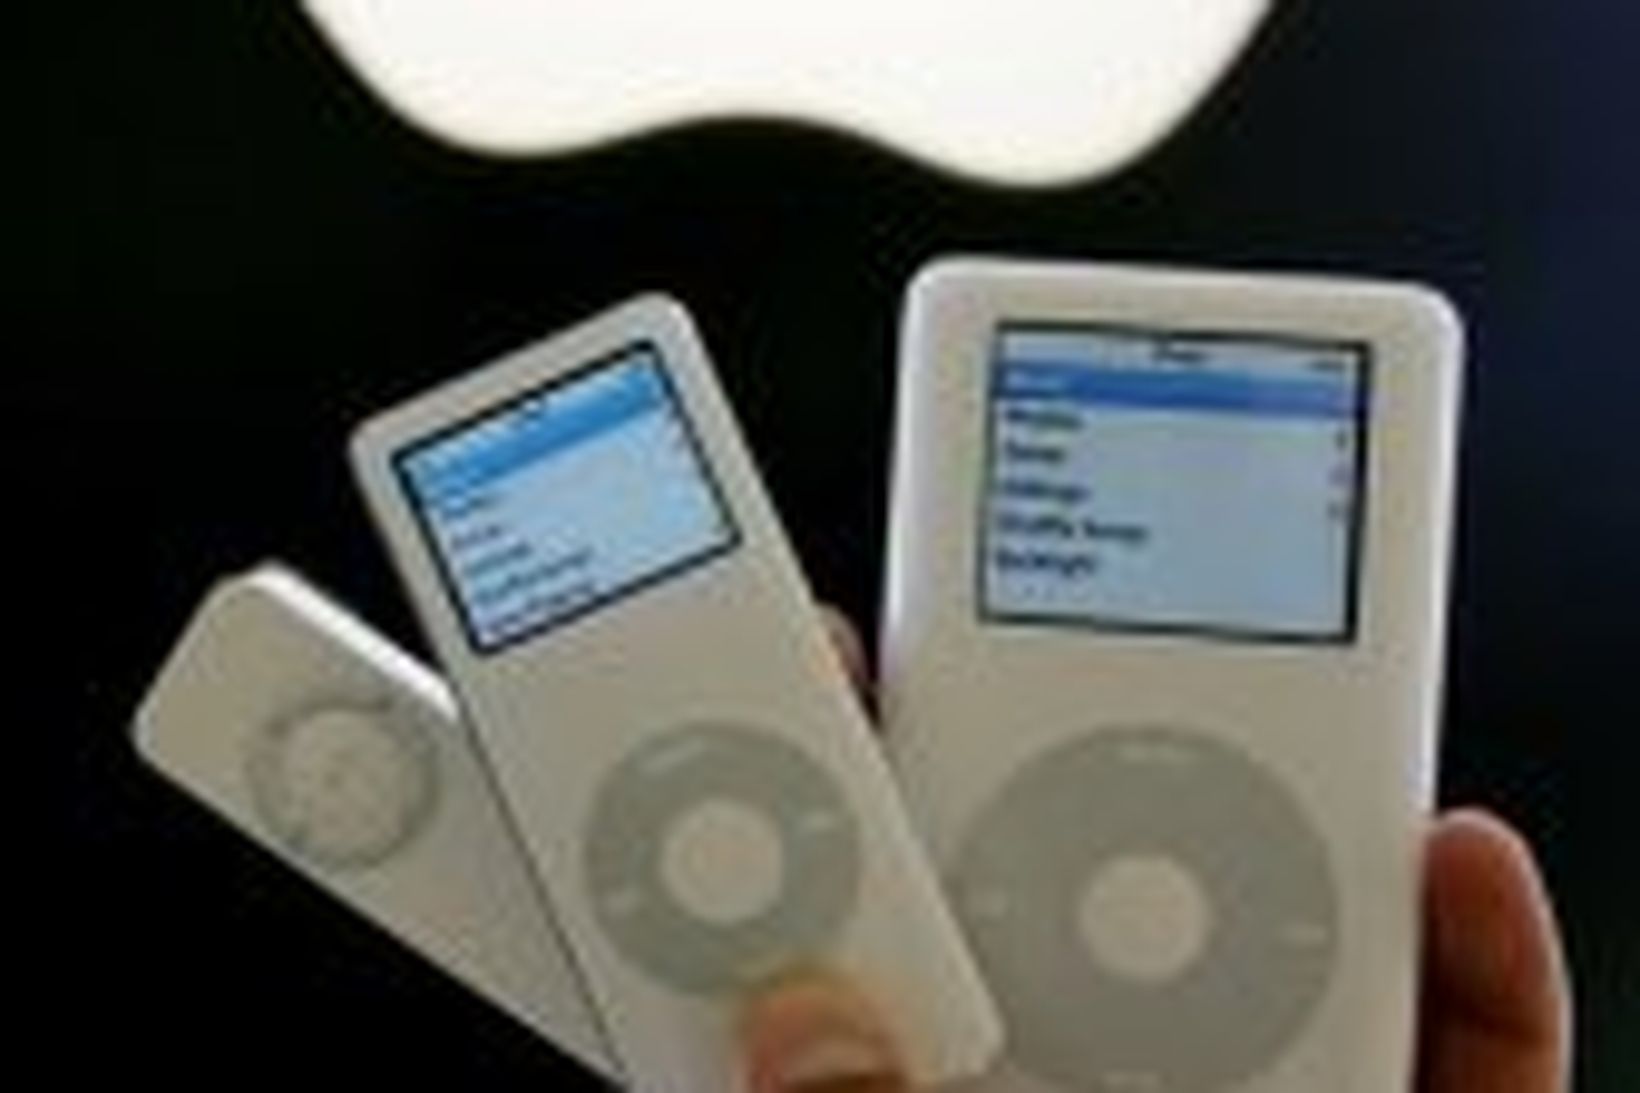 iPod frá Apple.